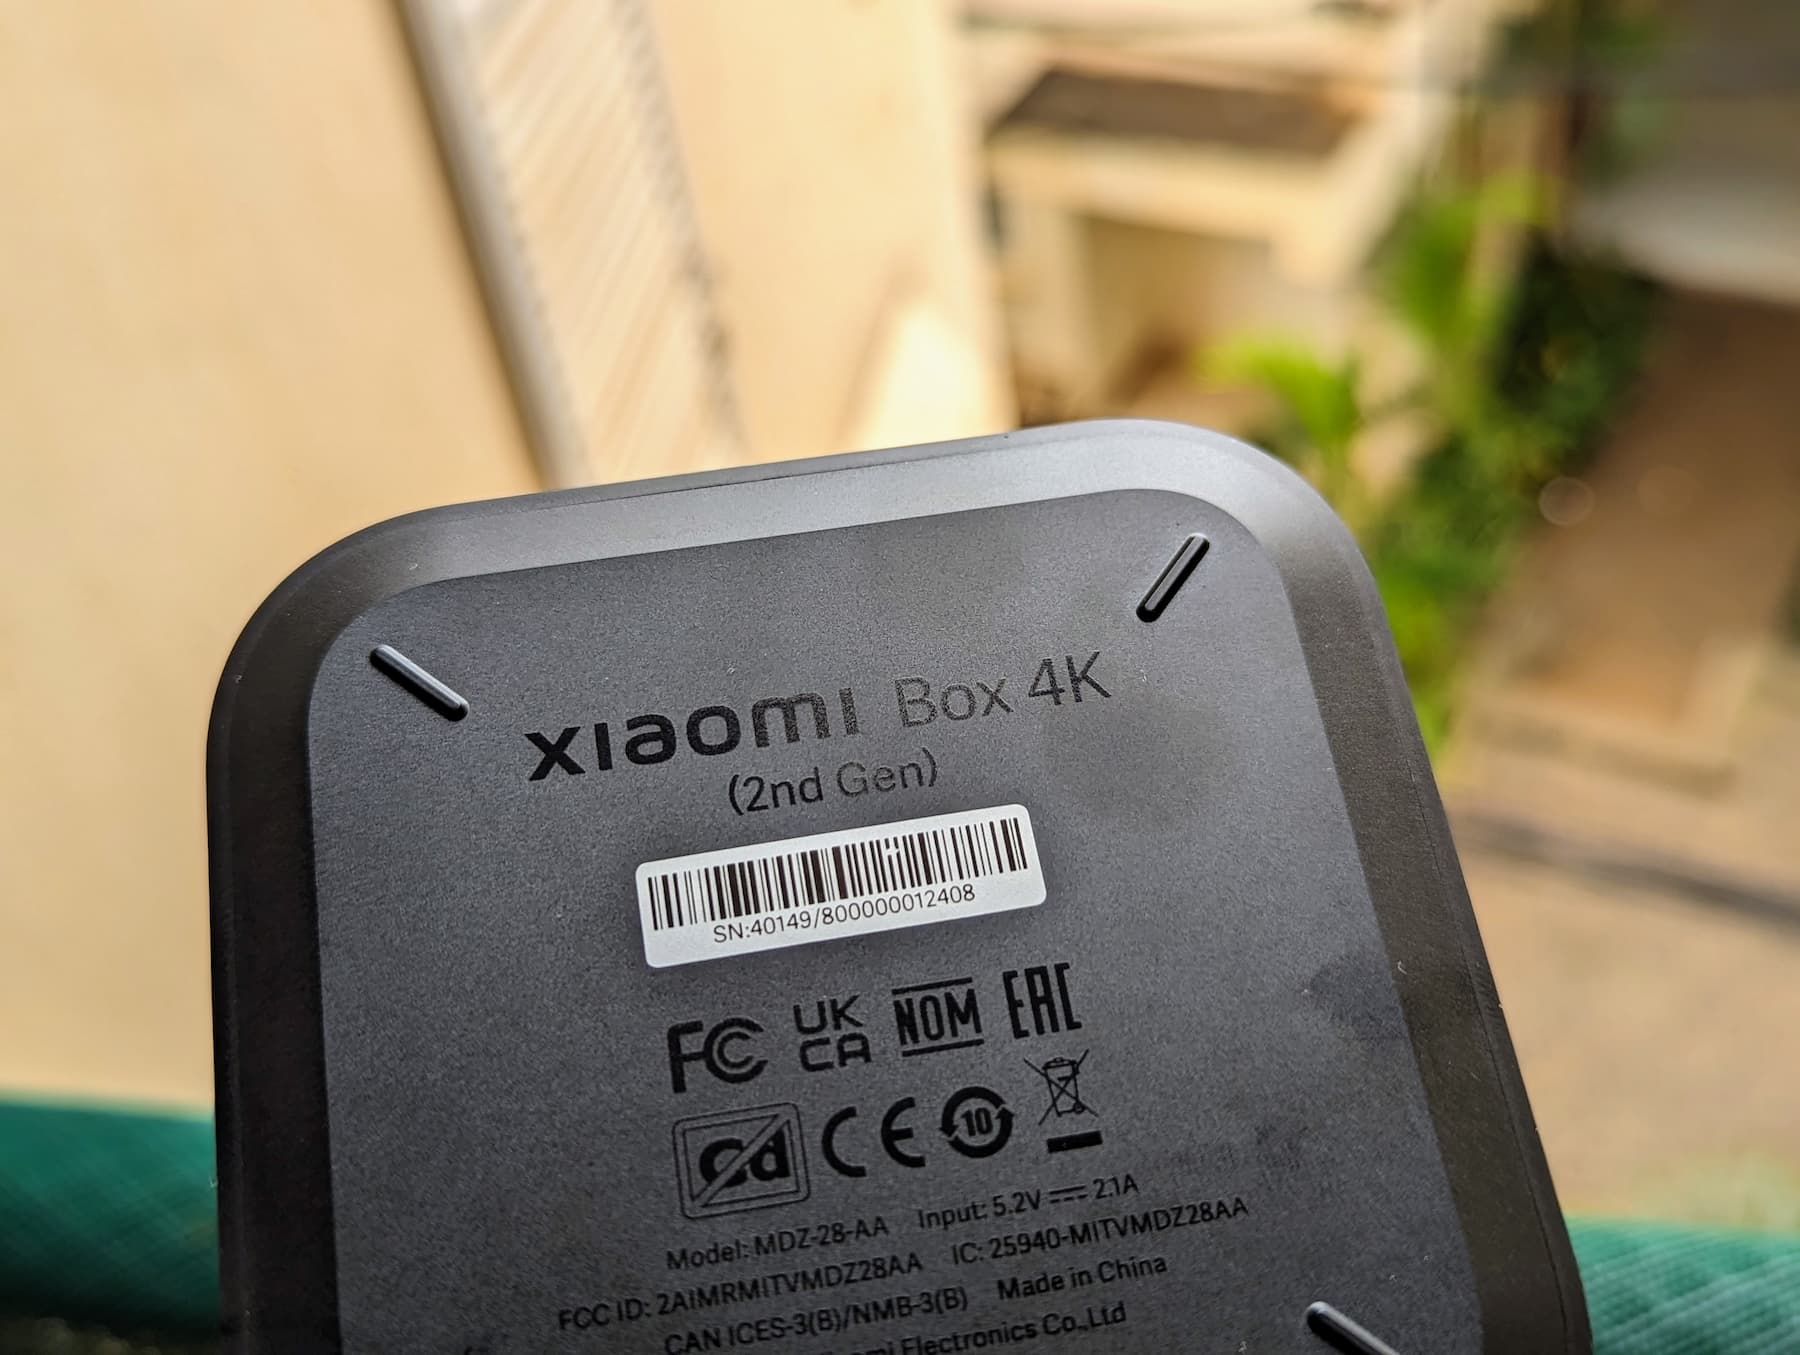 The Mi TV Stick vs Mi Box S 4K: What's right for you - Dignited